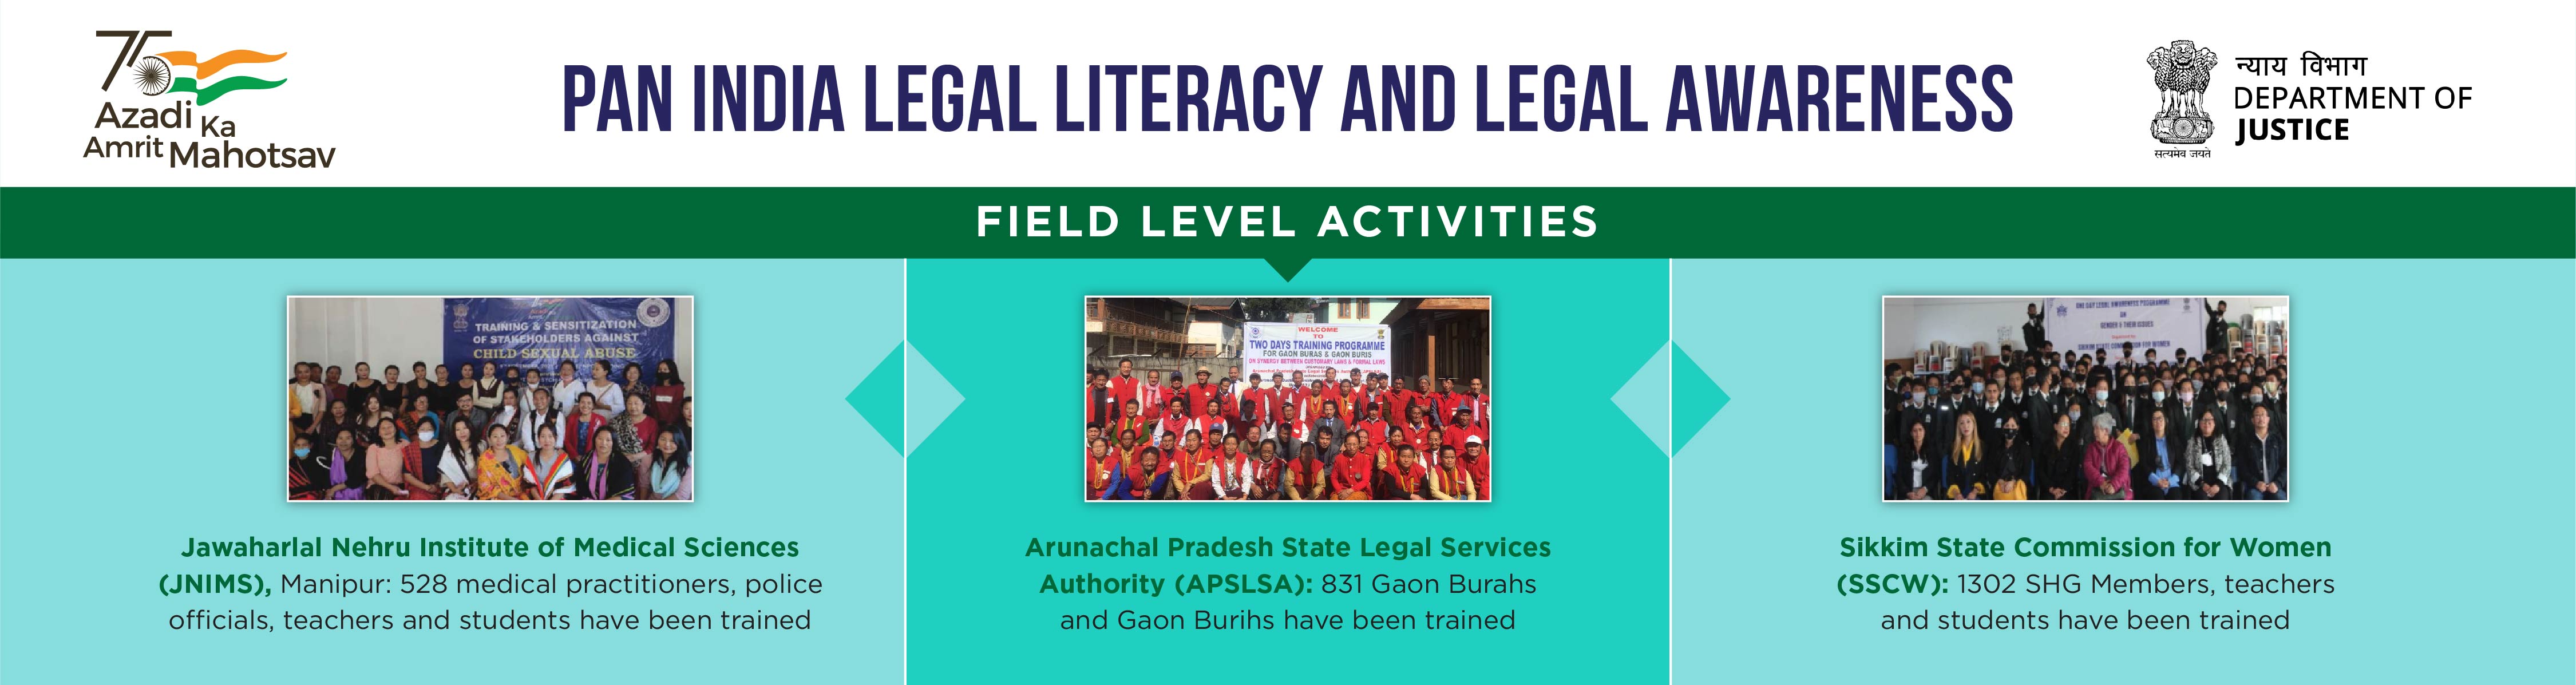 PAN India Legal Literacy and Legal Awareness